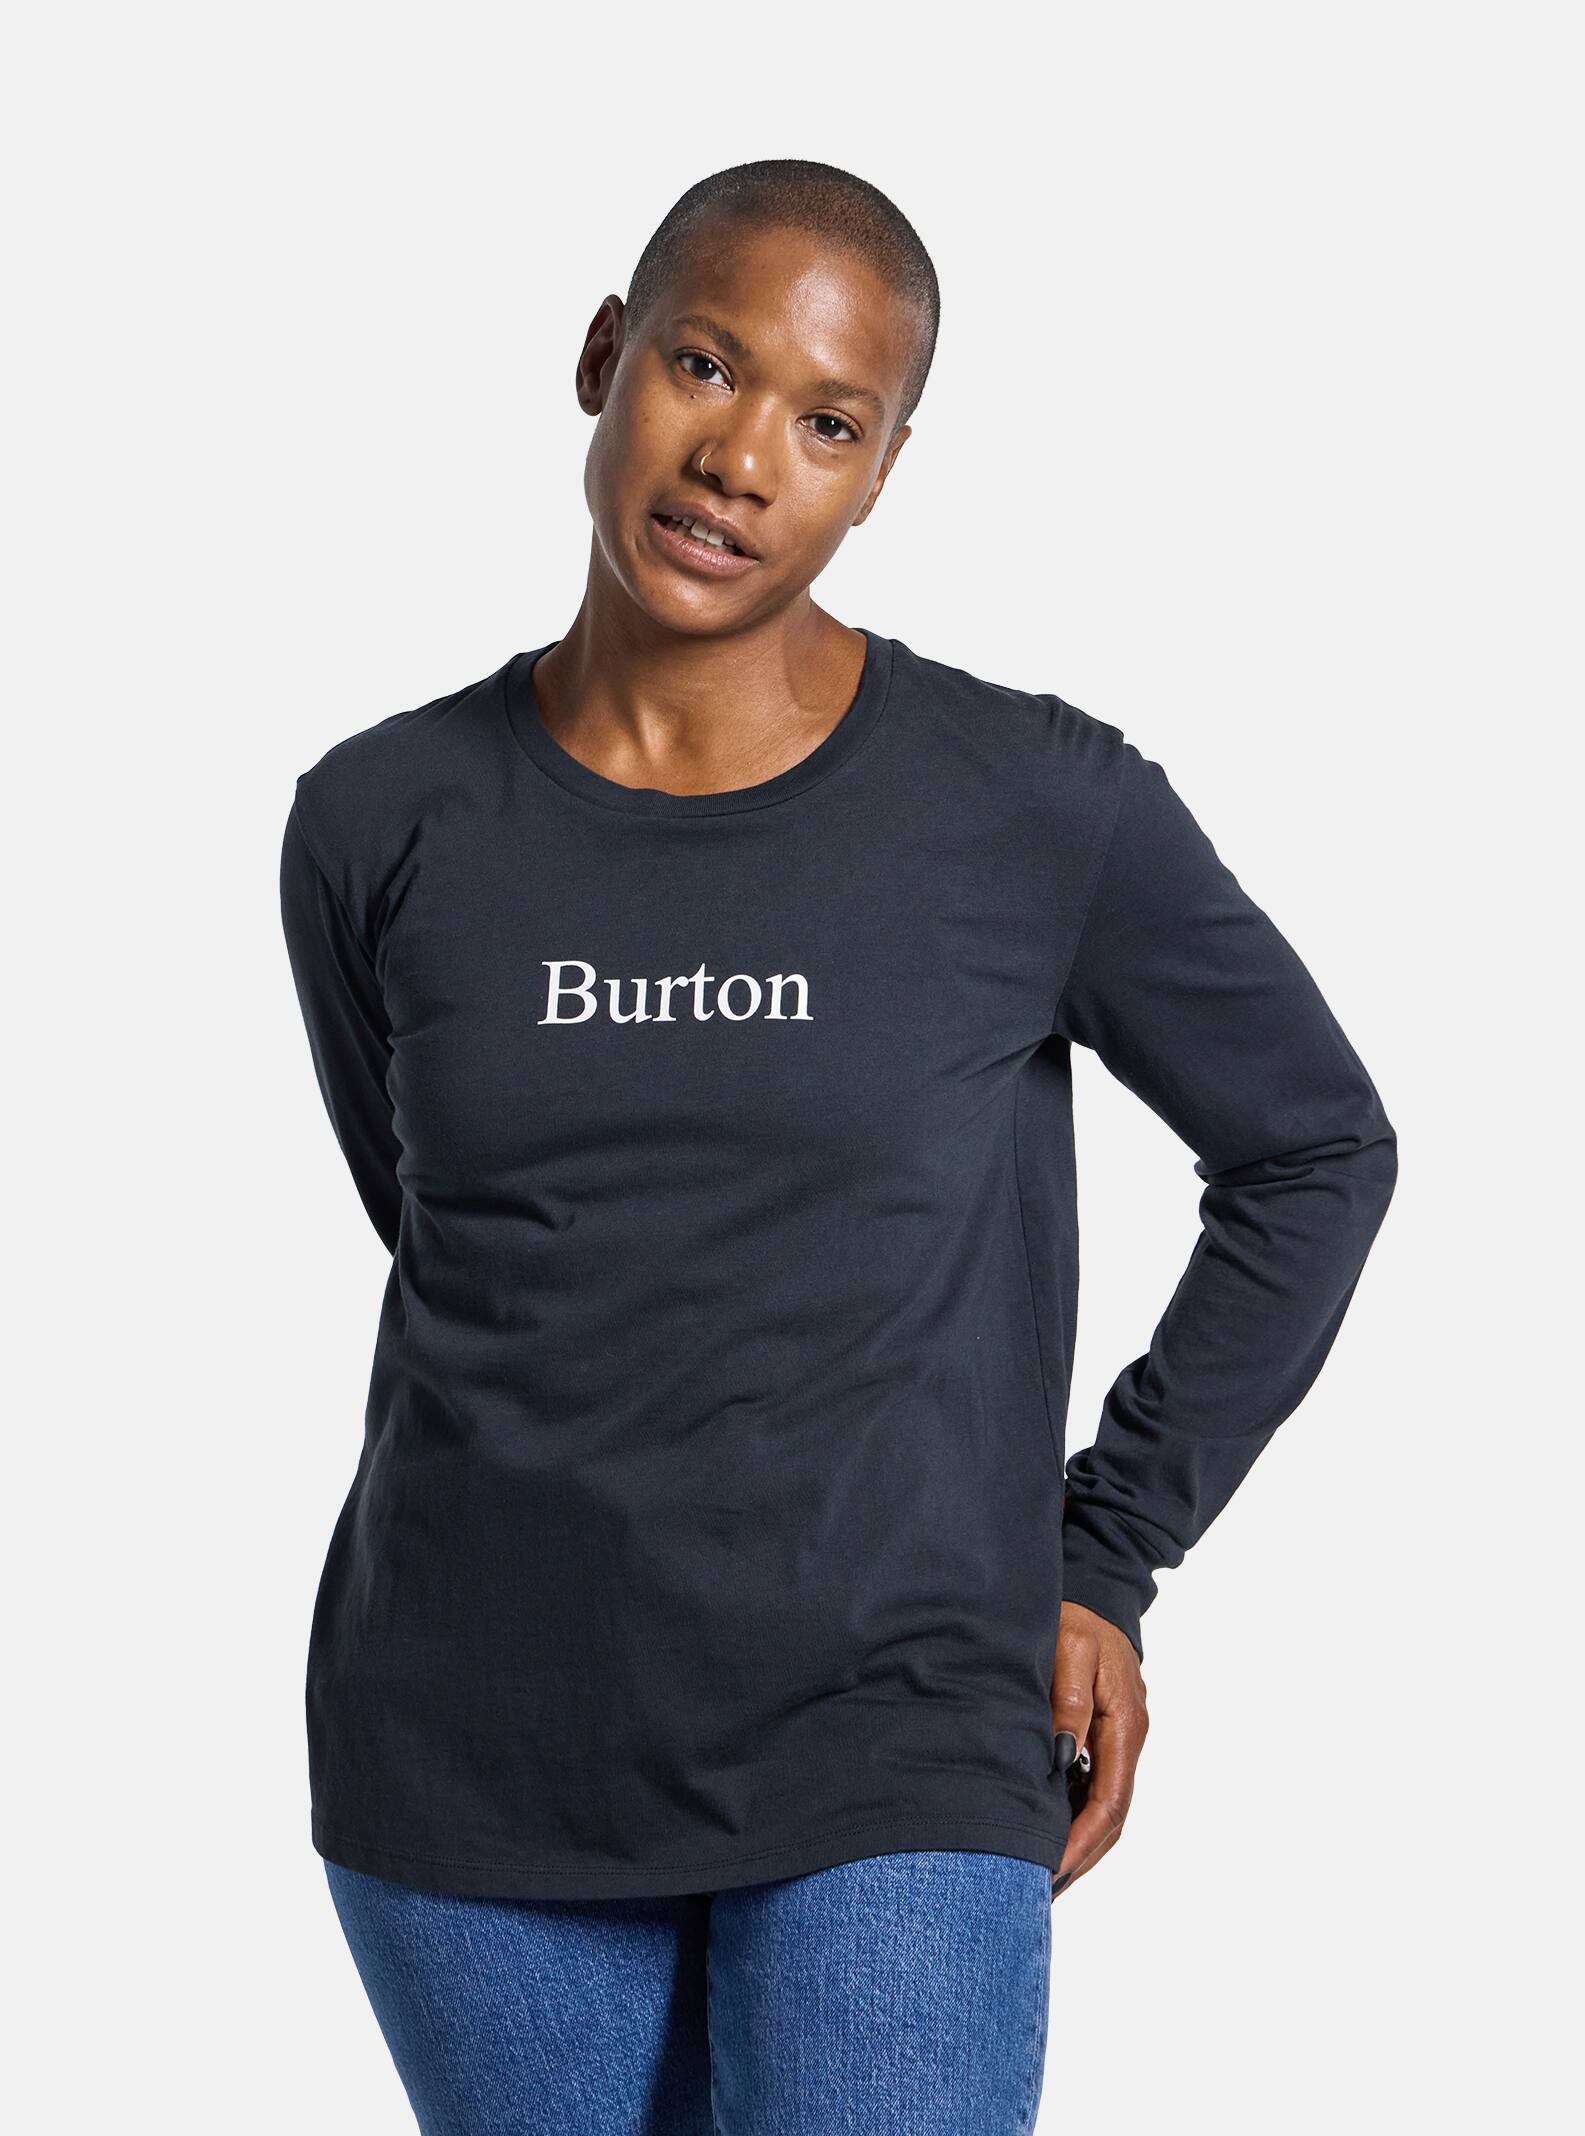 Tops T-Shirts Burton Damen T-Shirts Burton Damen mehrfarbig L/XL, T4 T-Shirt BURTON 42 Tops Damen Kleidung Burton Damen Oberteile Burton Damen Tops 